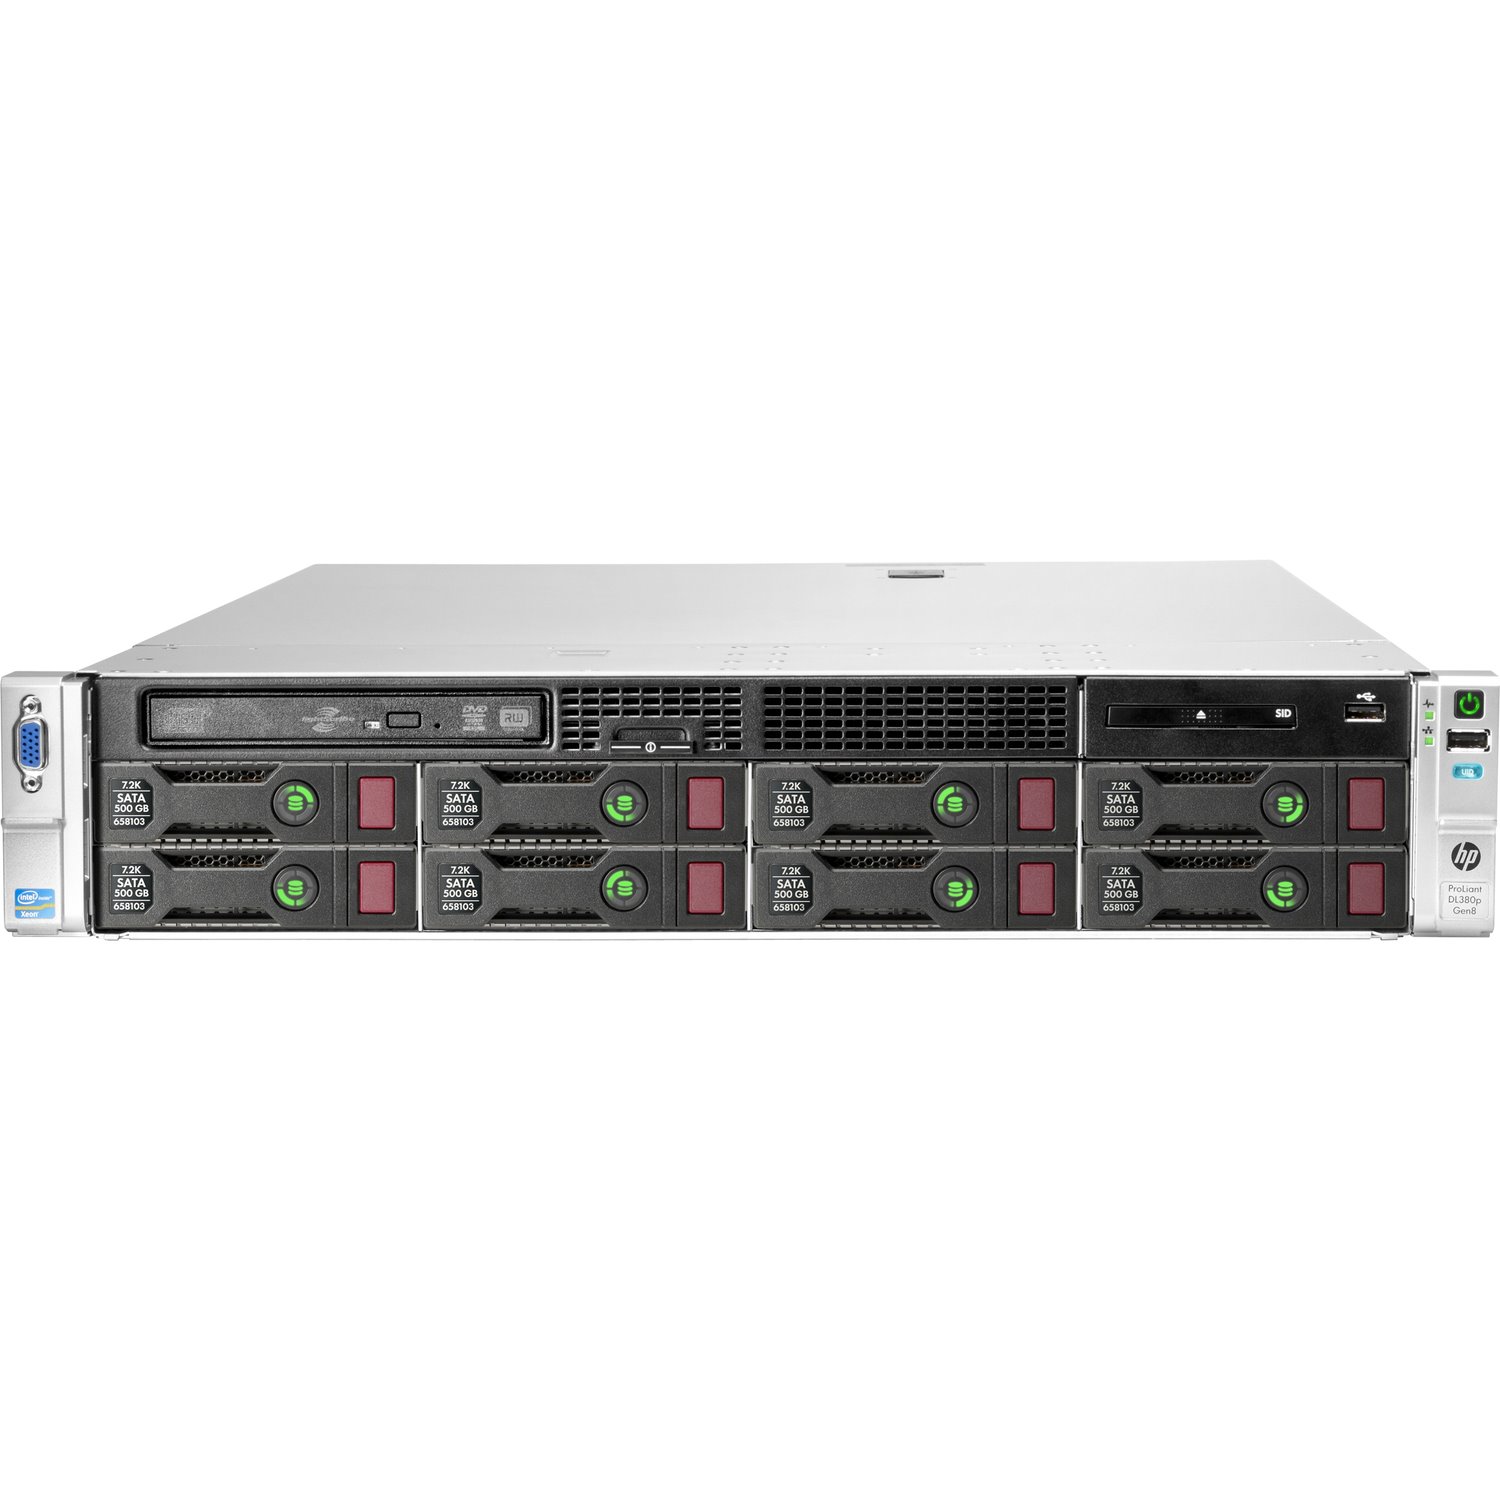 HPE-IMSourcing ProLiant DL380p G8 2U Rack Server - 2 x Intel Xeon E5-2640 2.50 GHz - 16 GB RAM - Serial Attached SCSI (SAS) Controller